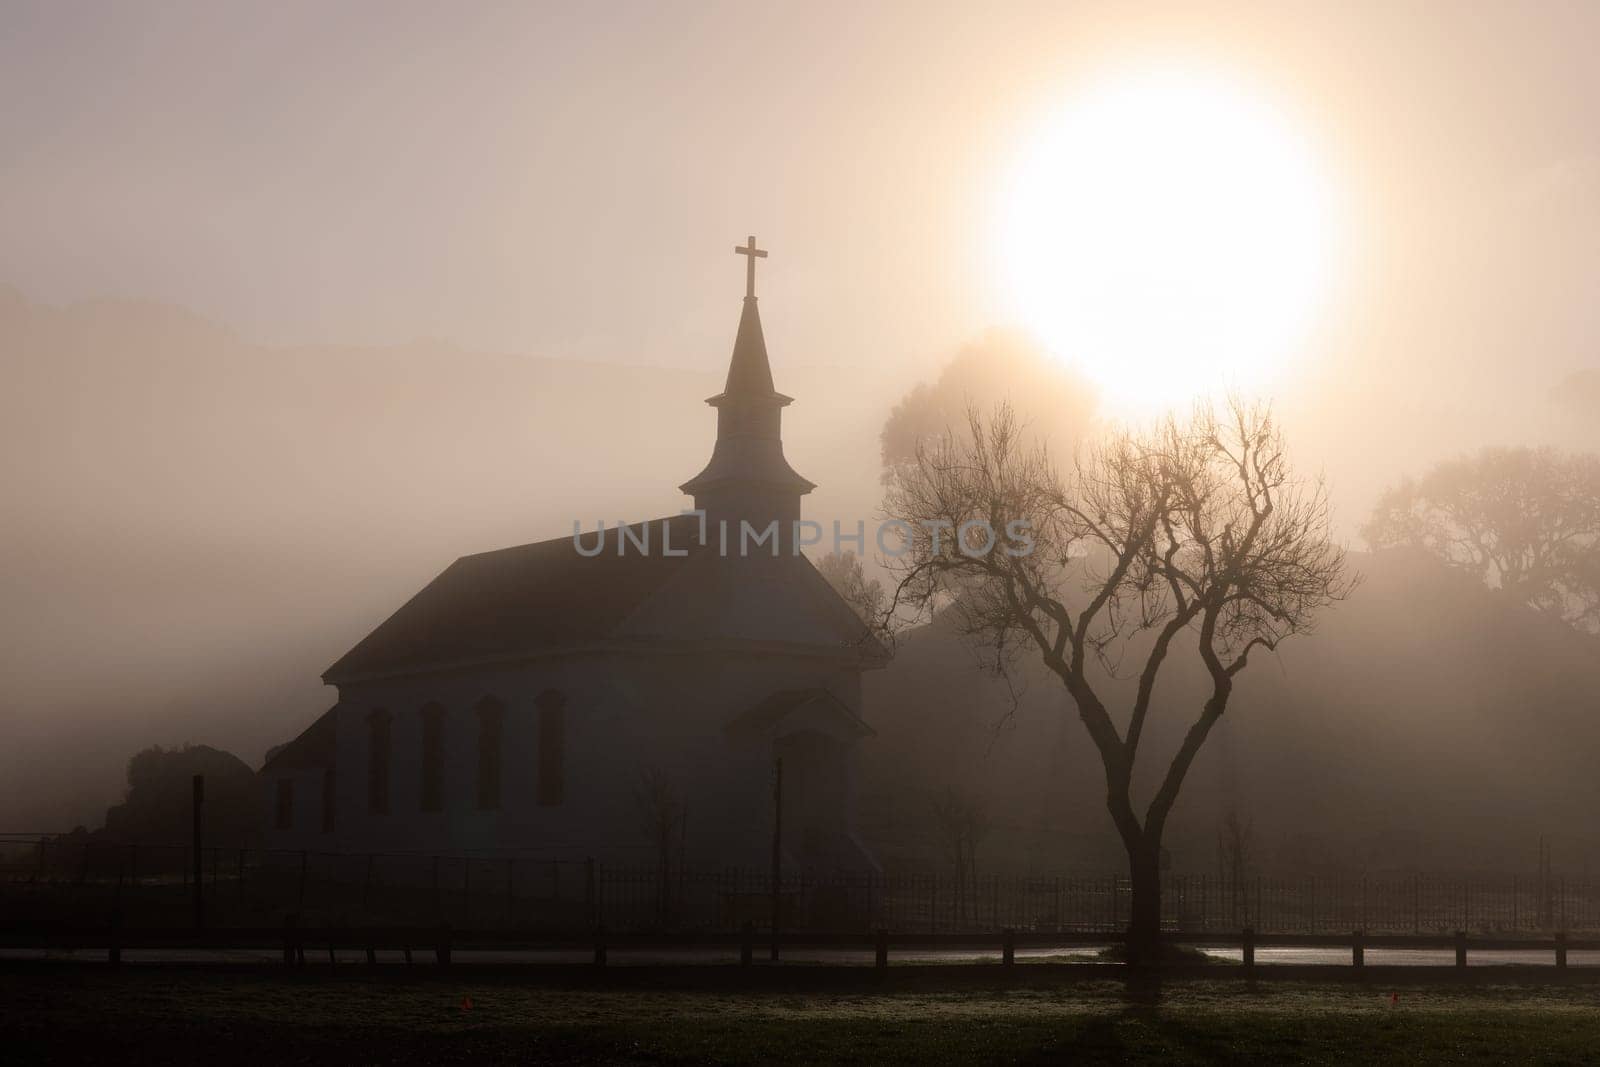 Brilliant bright sun silhouettes small church and tree in fog at dawn. High quality photo